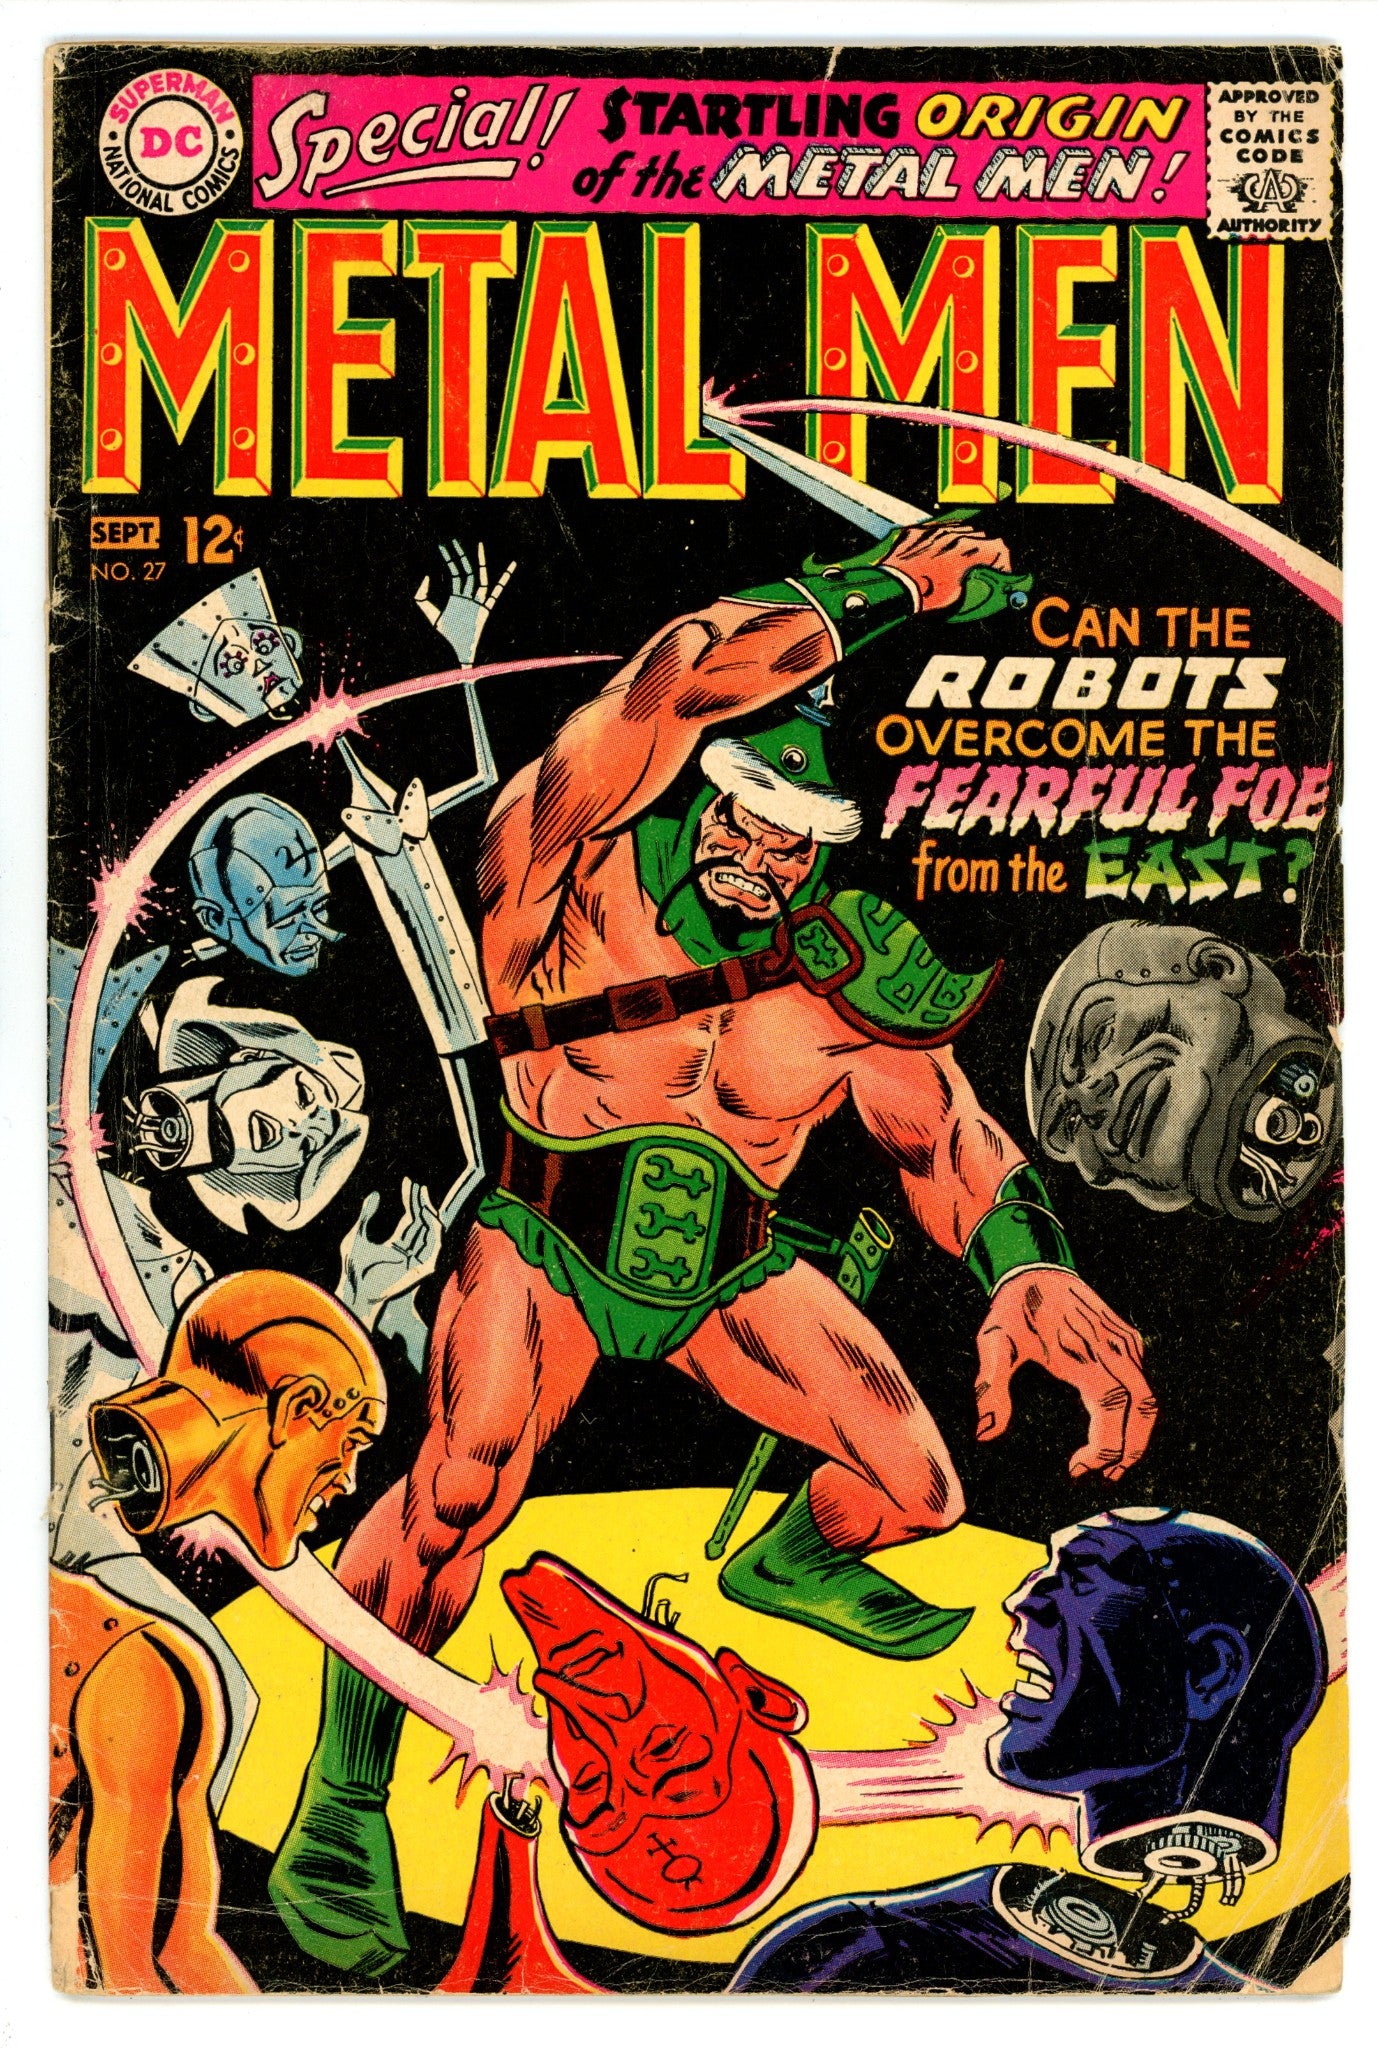 Metal Men Vol 1 27 VG- (3.5) (1967) 